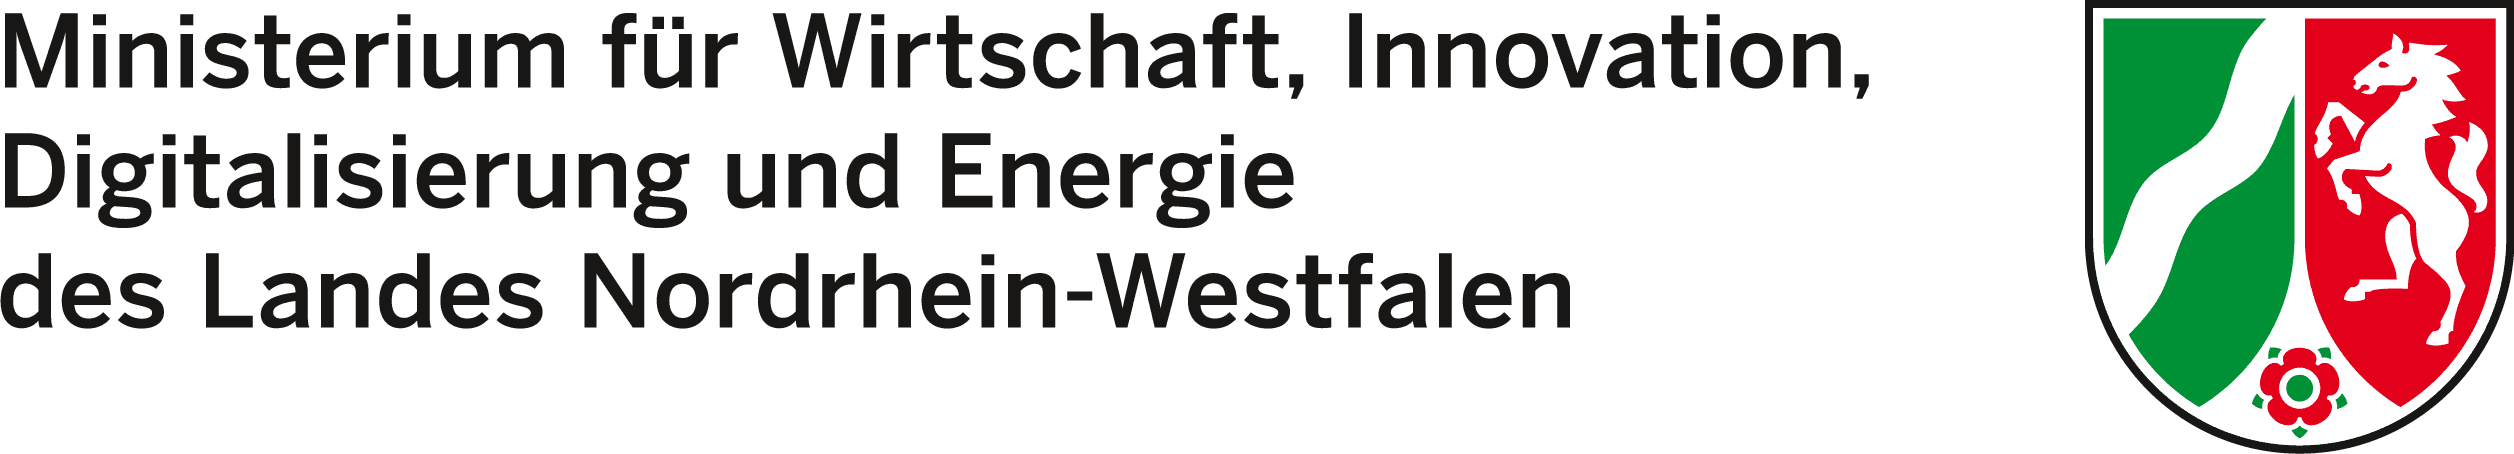 Innoloft customer logo North Rhine-Westphalia state government